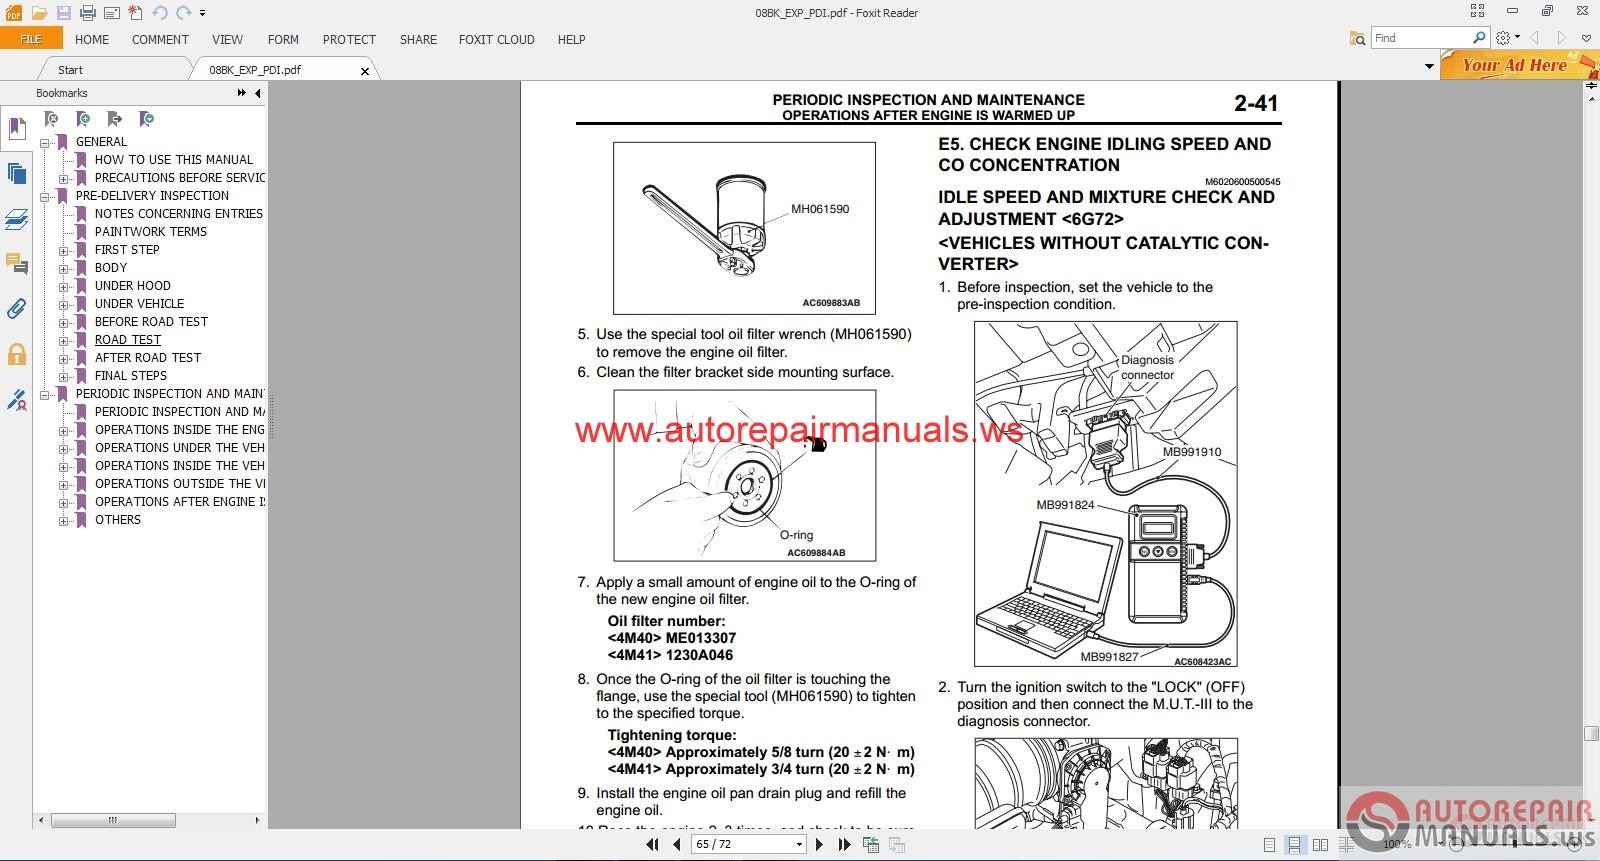 Service manual [Mitsubishi Pajero Ge 2008 Service ...